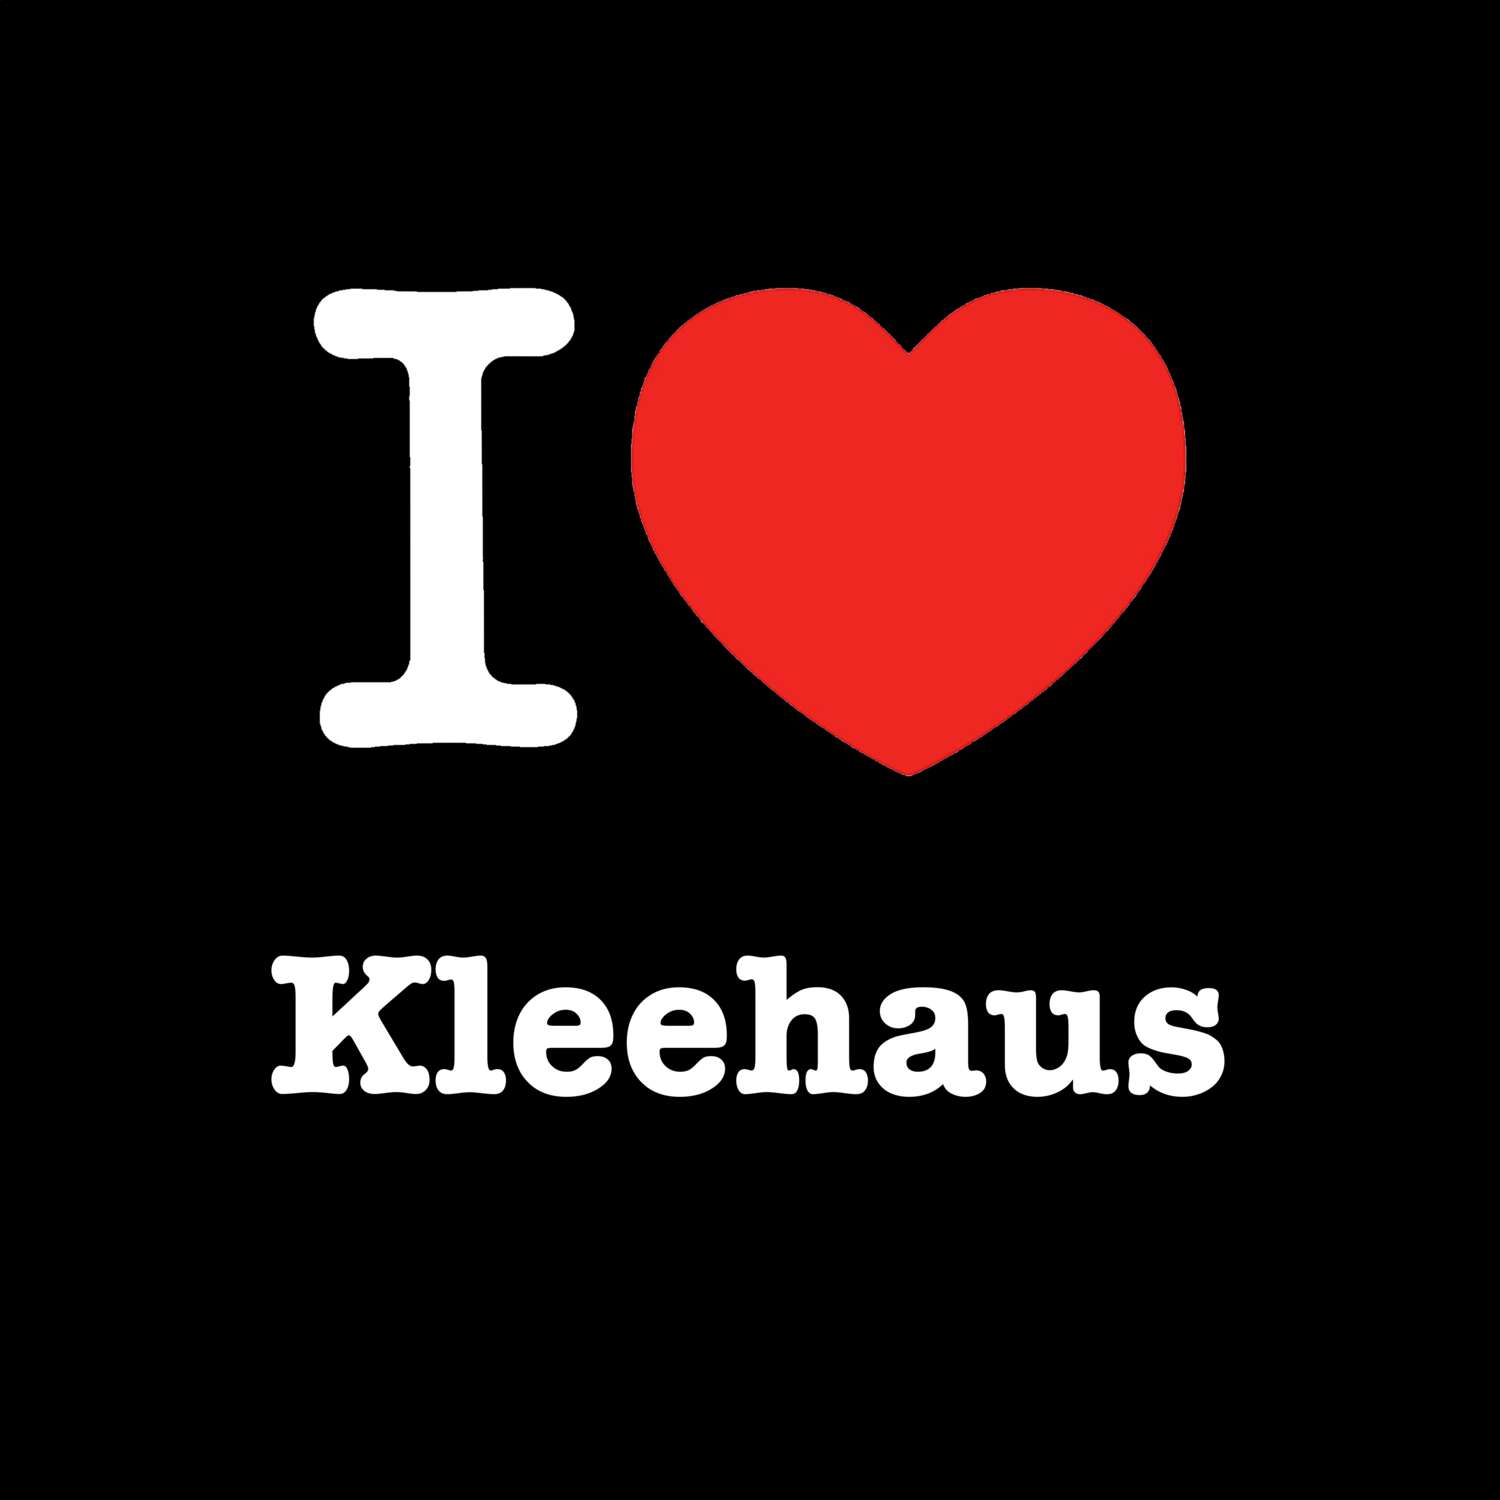 Kleehaus T-Shirt »I love«